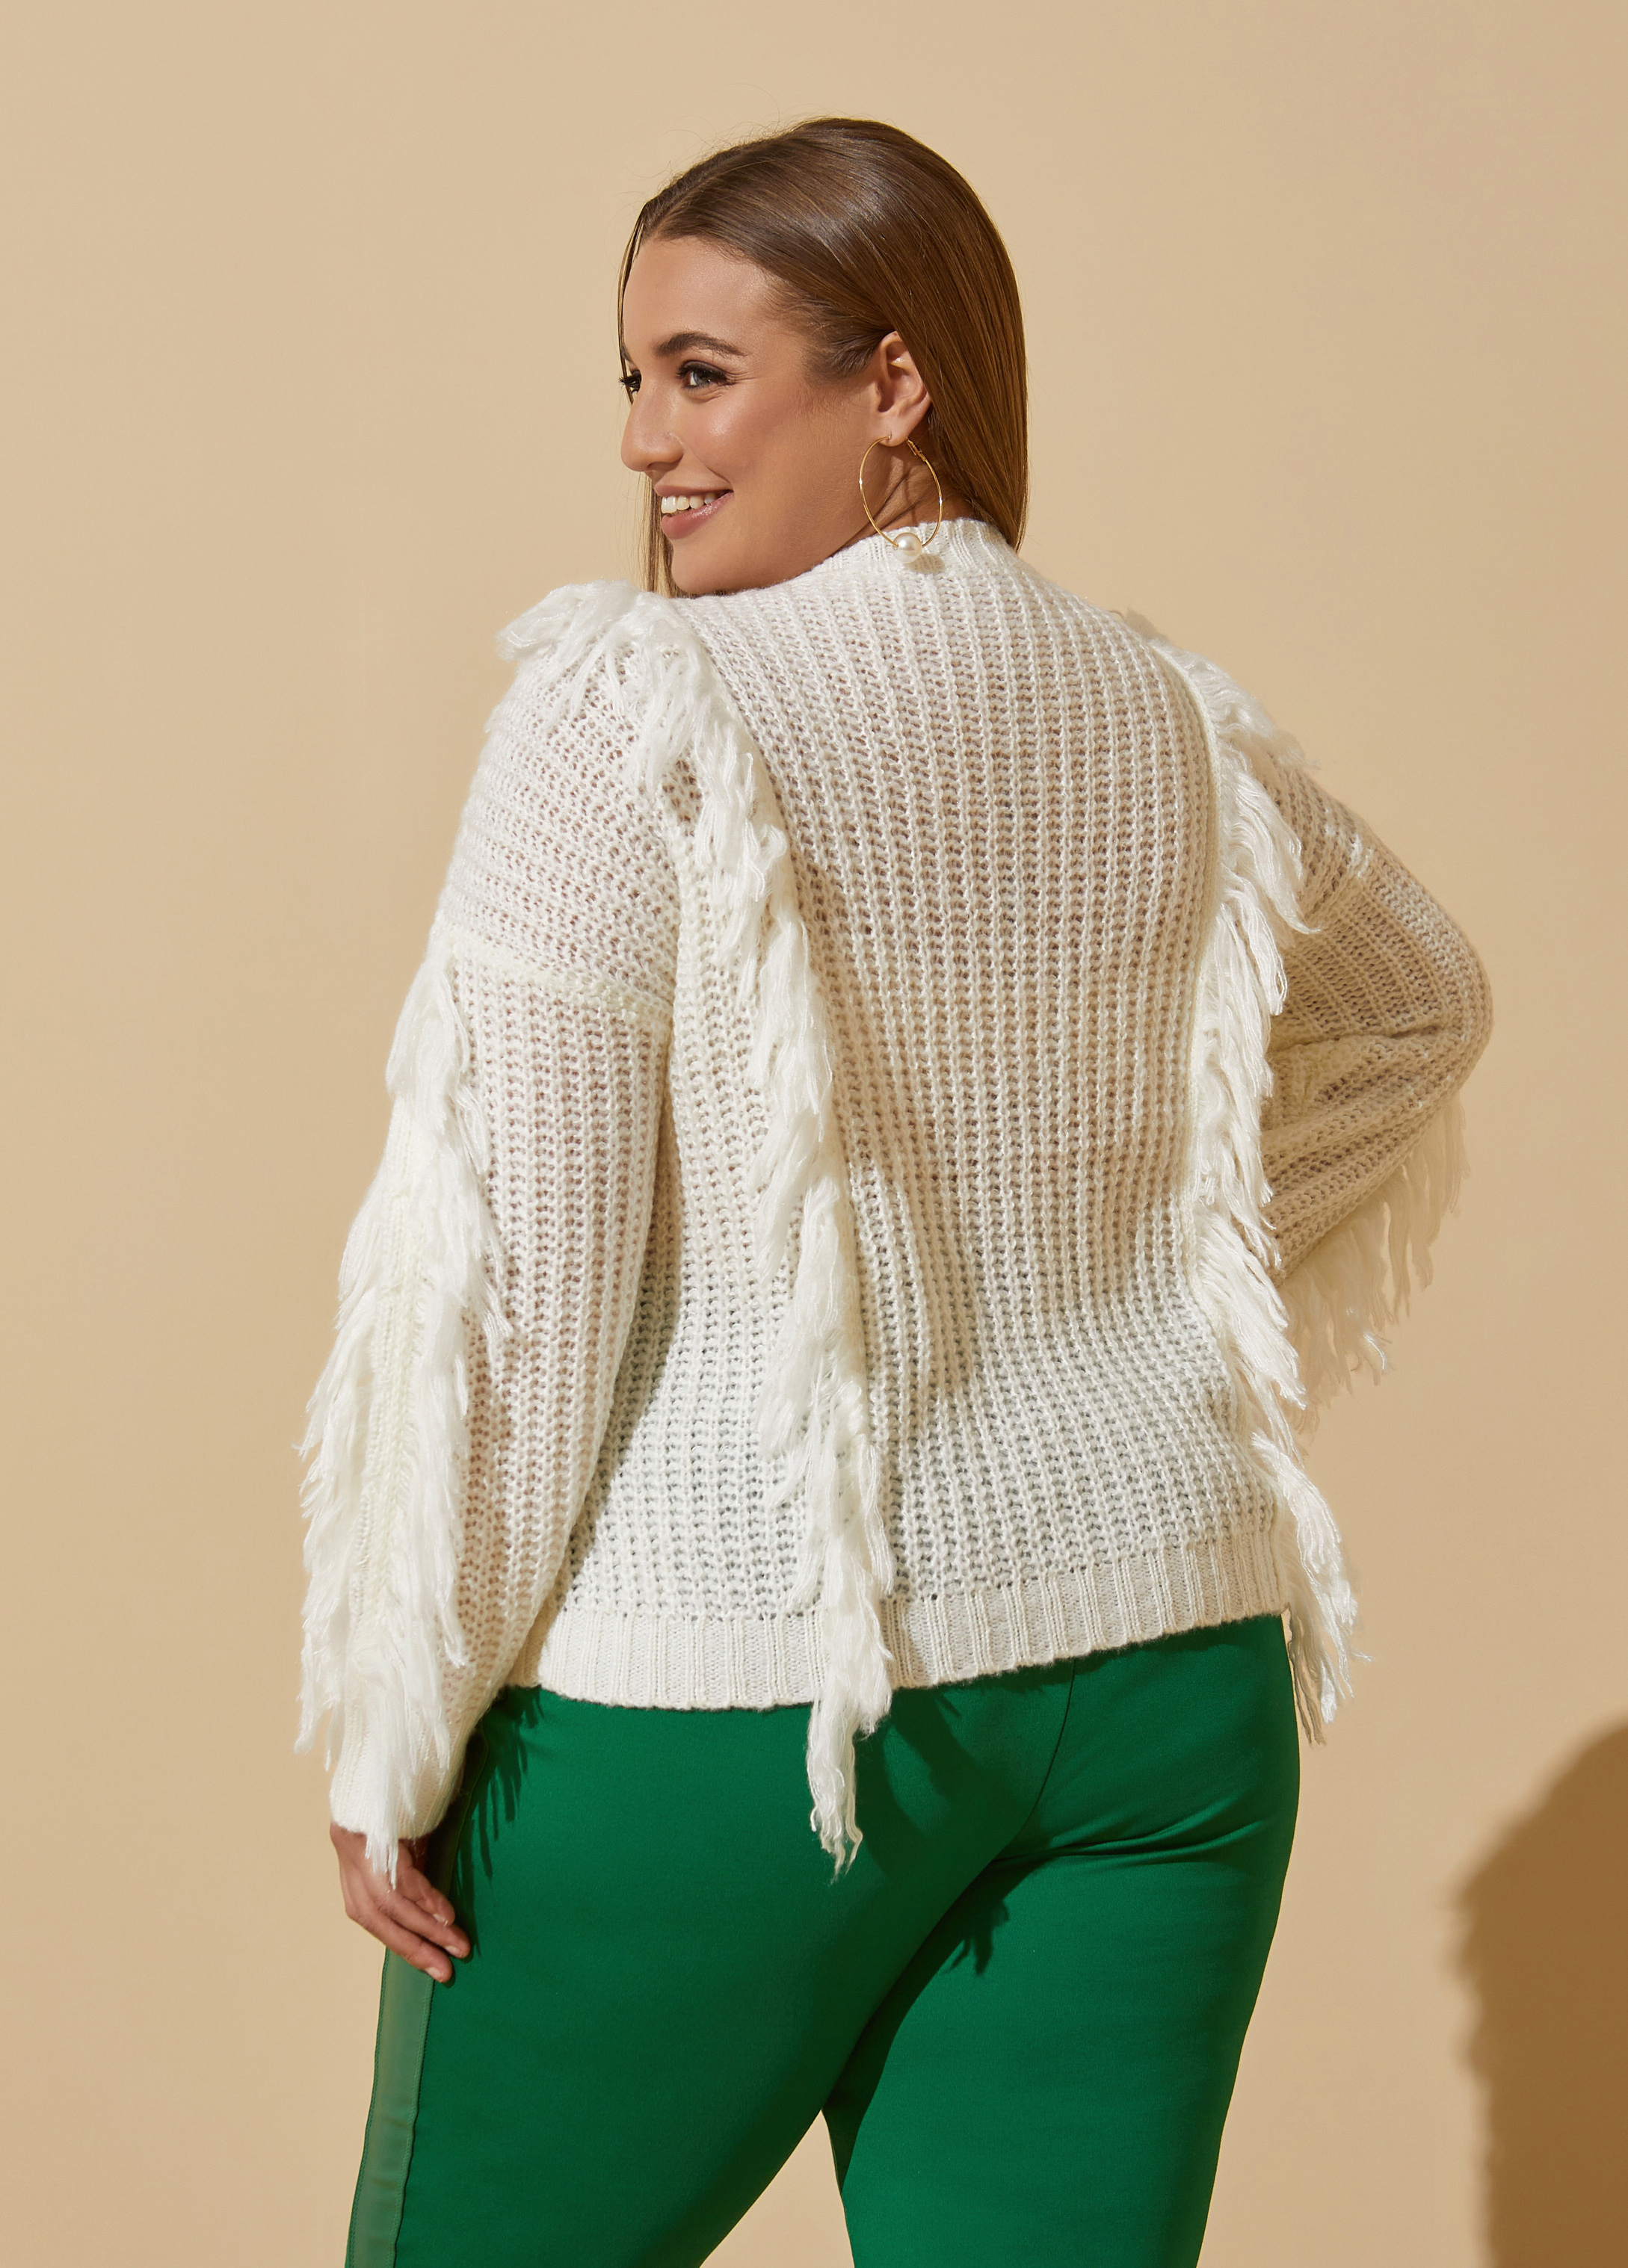 Plus Size cable knit sweater plus size knit tops plus size knits